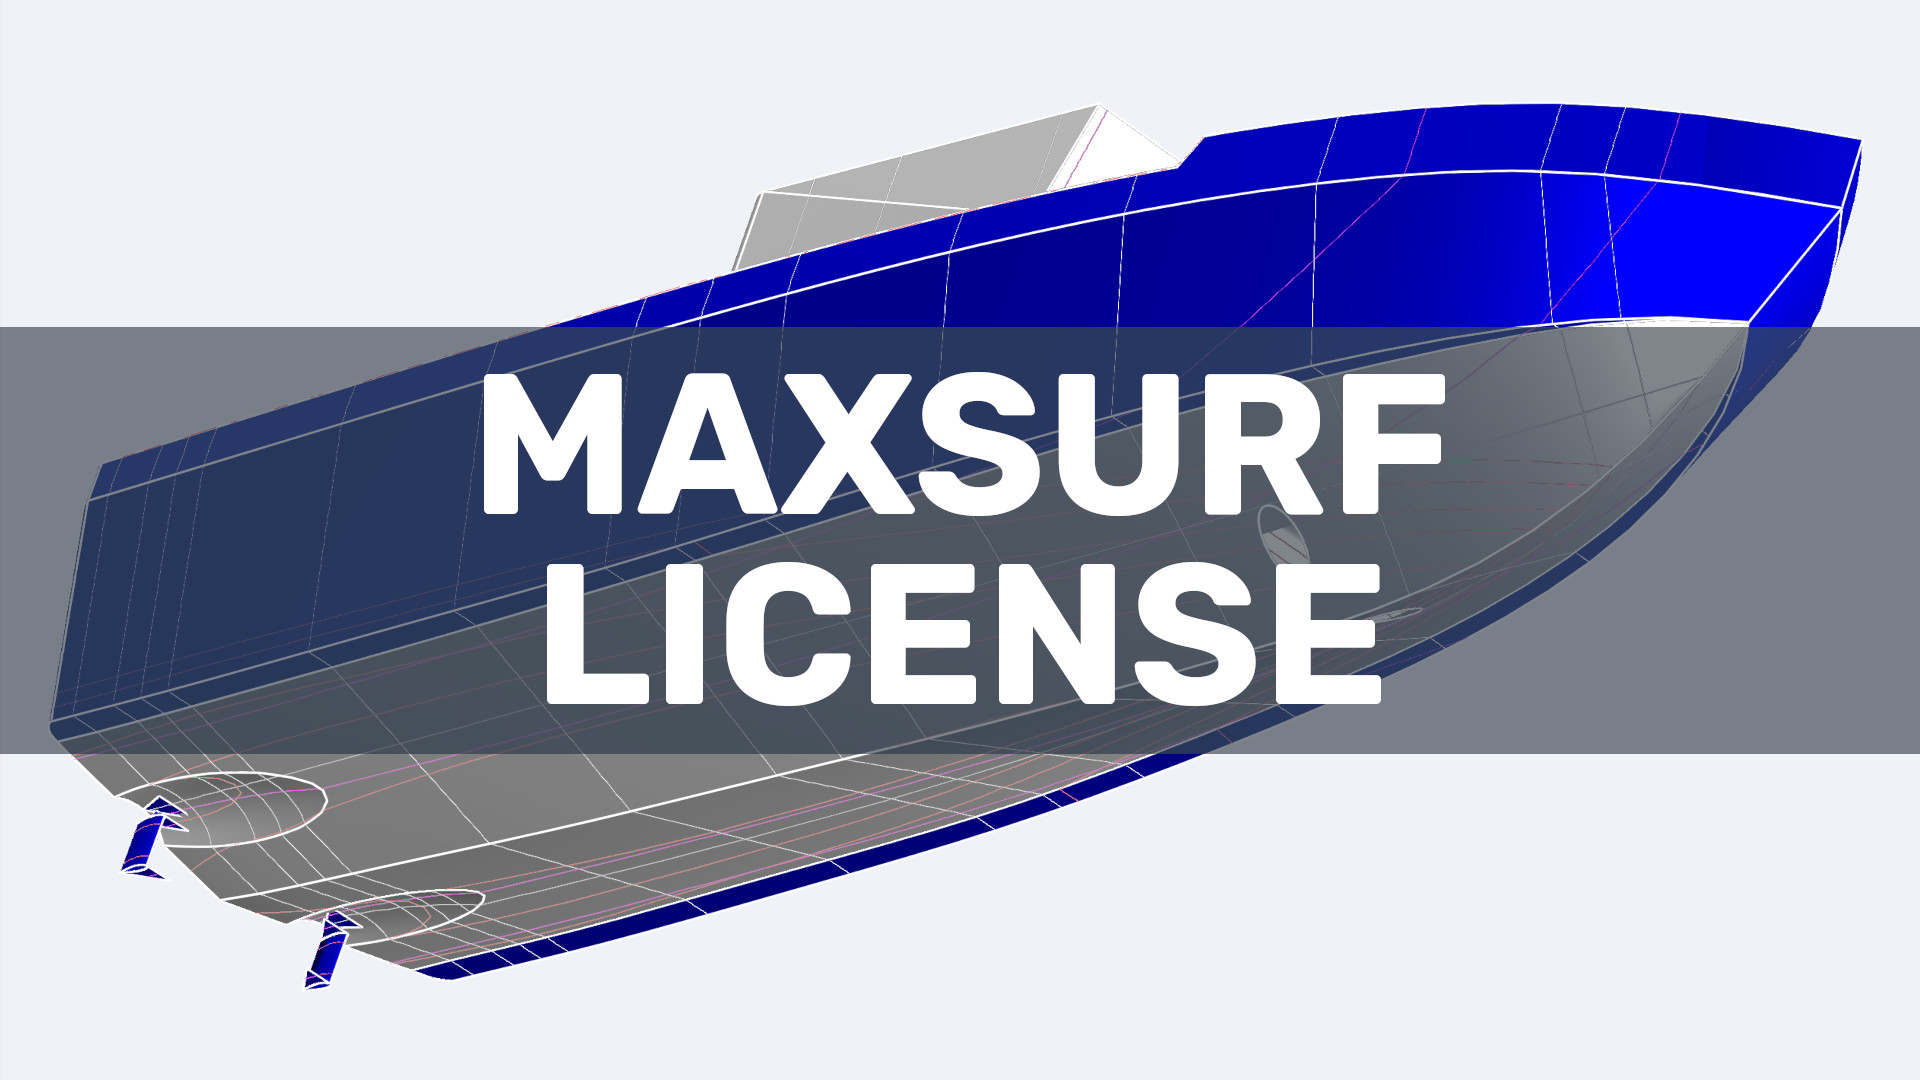 Maxsurf License